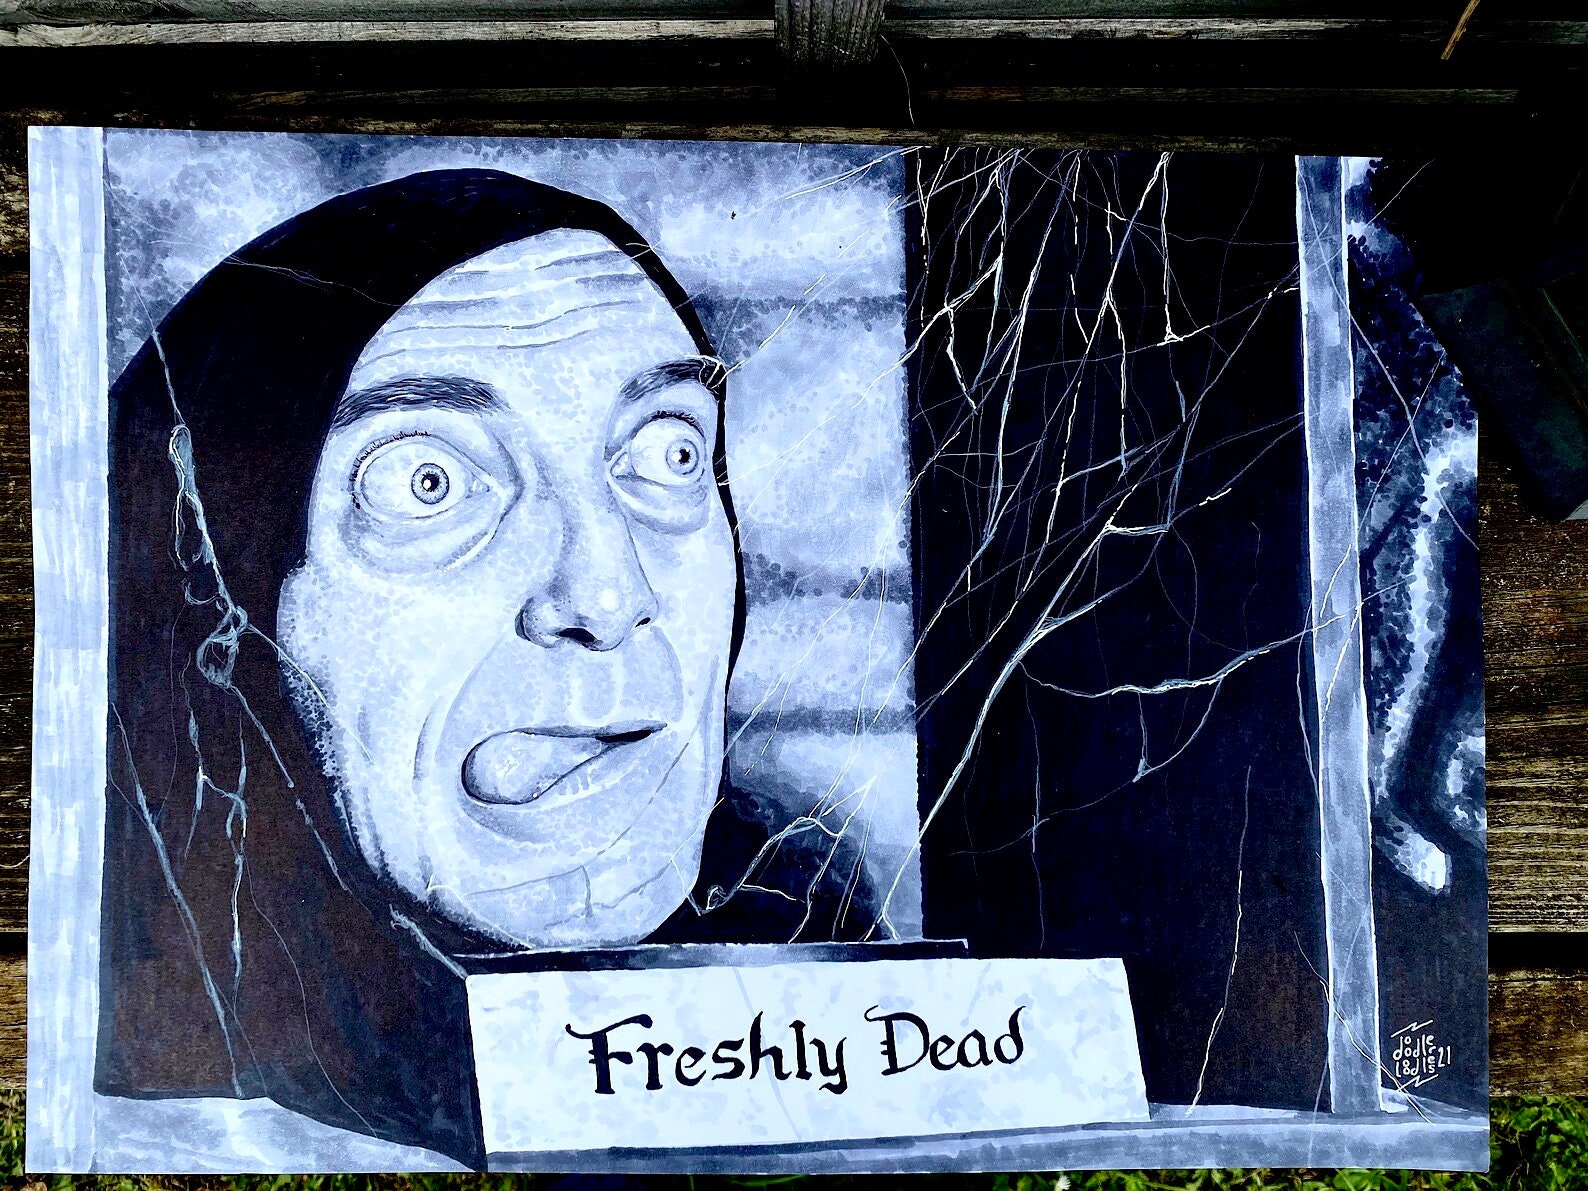 NPG x34558; Marty Feldman as Igor in 'Young Frankenstein' - Portrait -  National Portrait Gallery